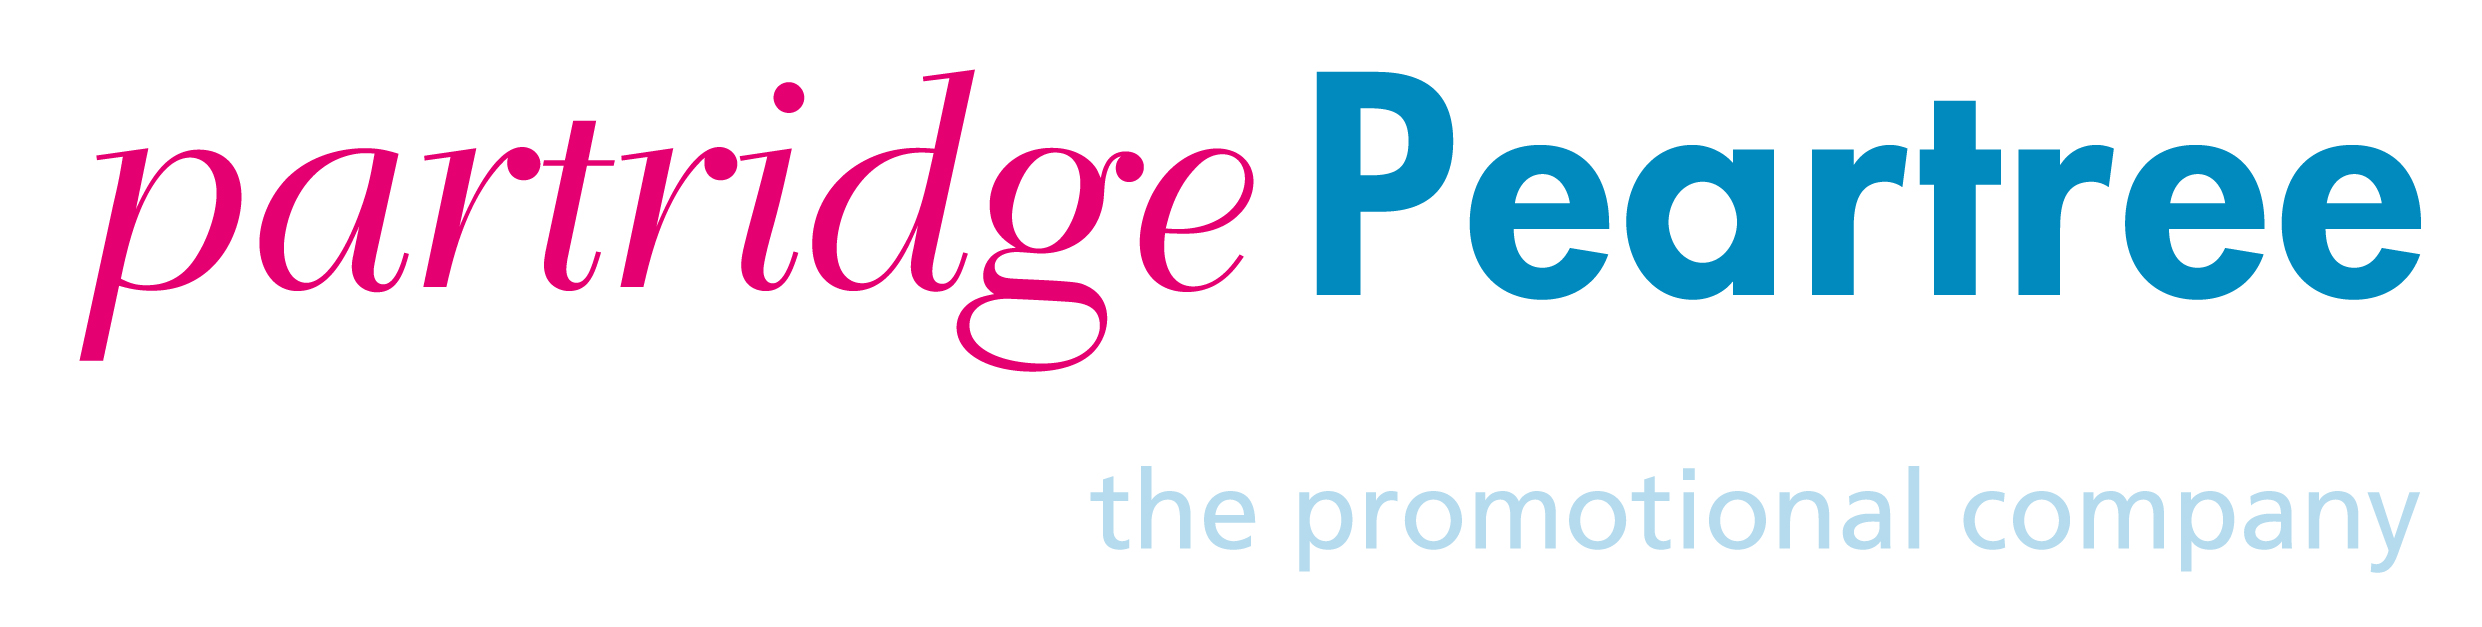 Partridge Peartree Promotions Ltd.